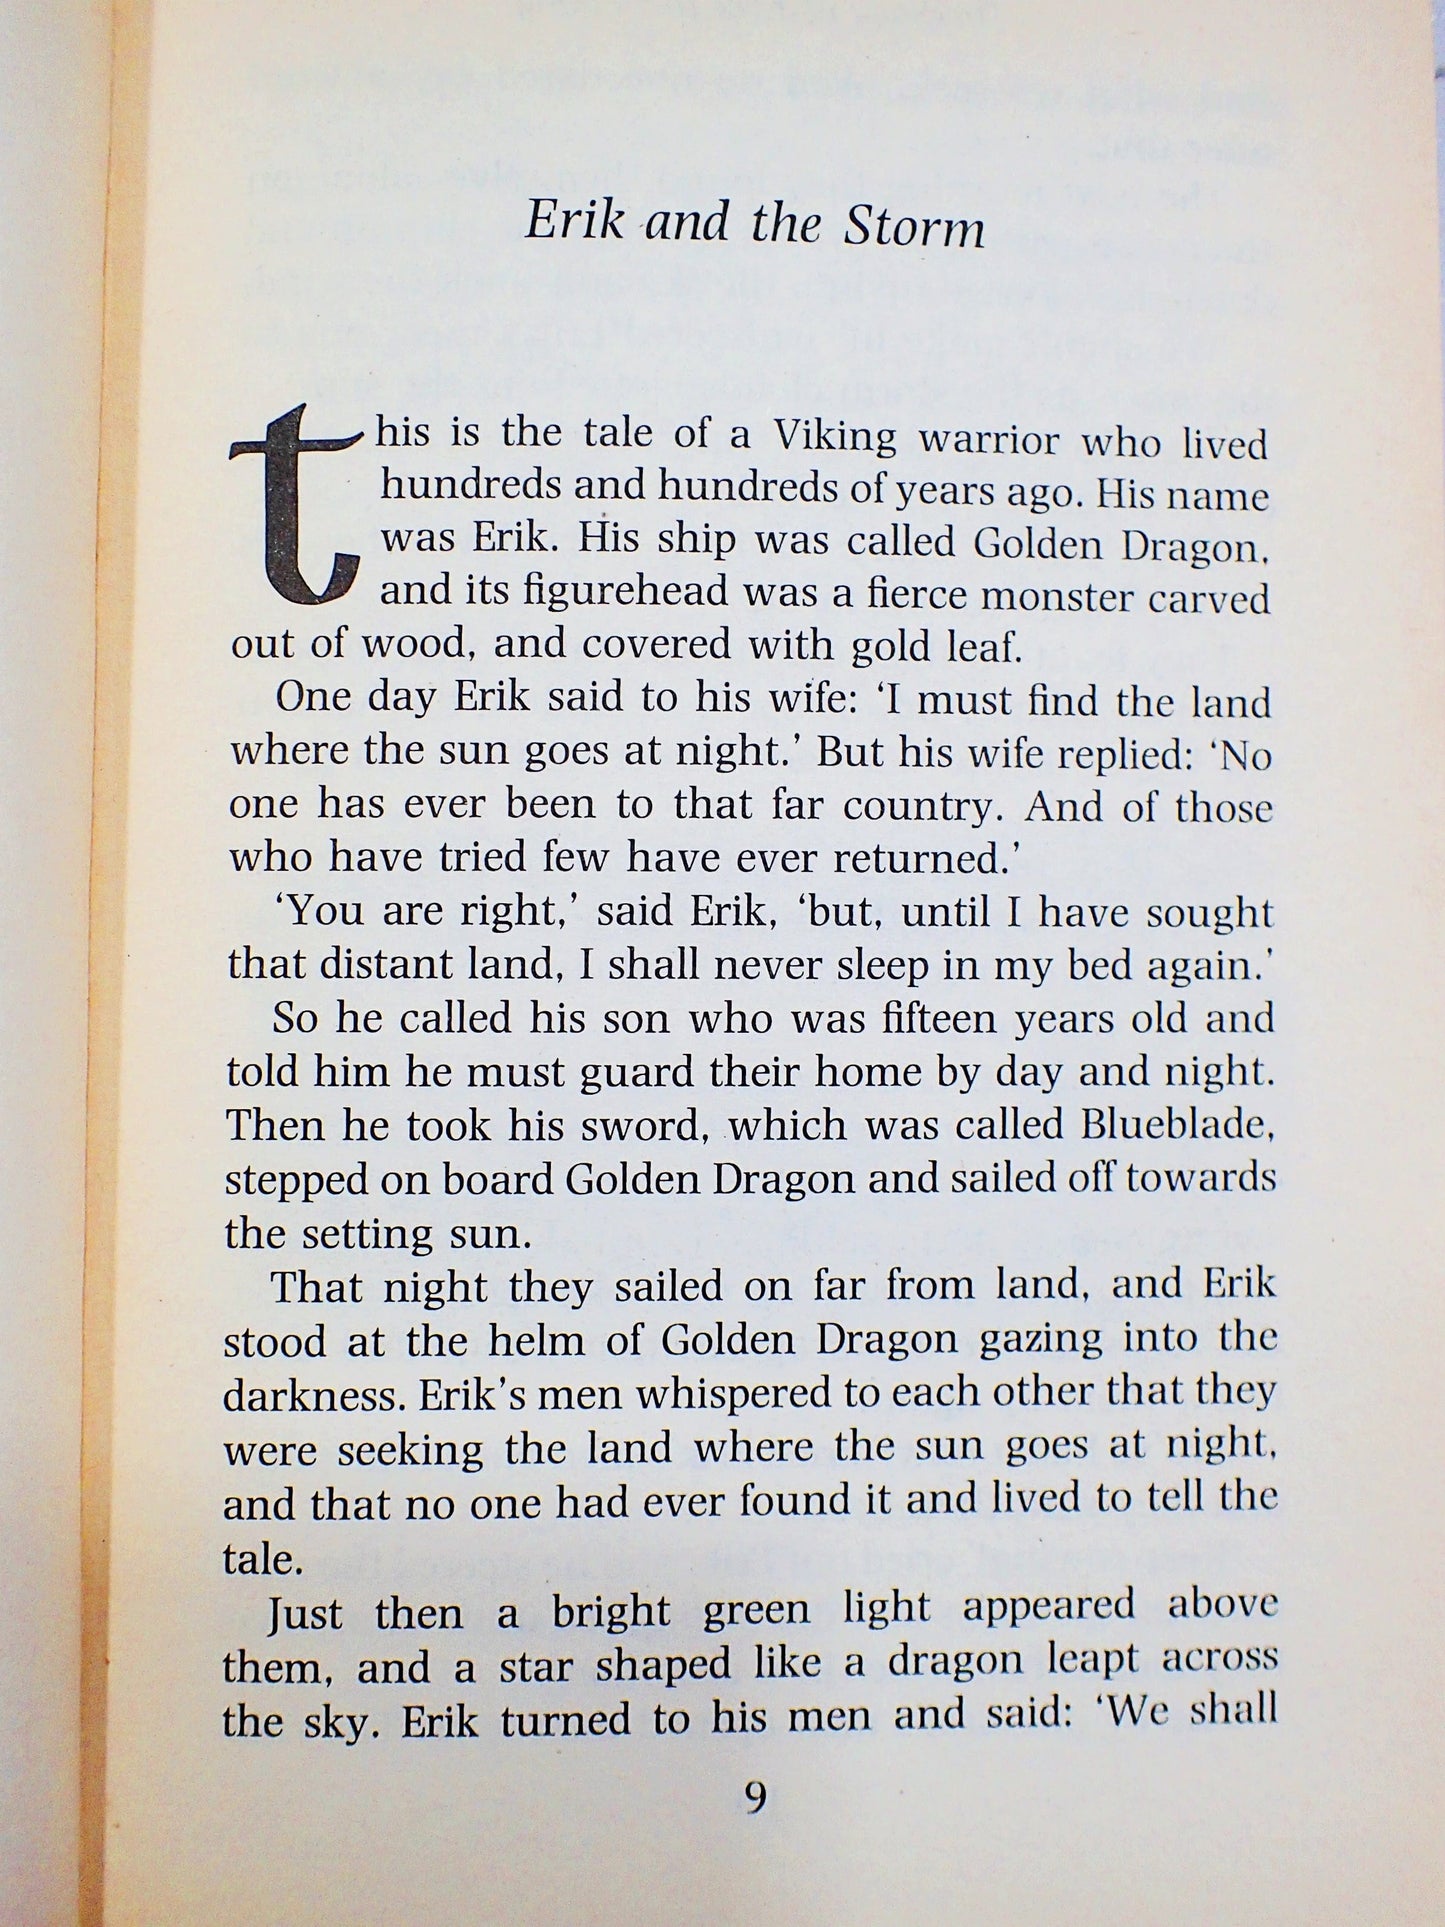 The Saga of Erik the Viking by Terry Jones Puffin Vintage Children's Book 1988